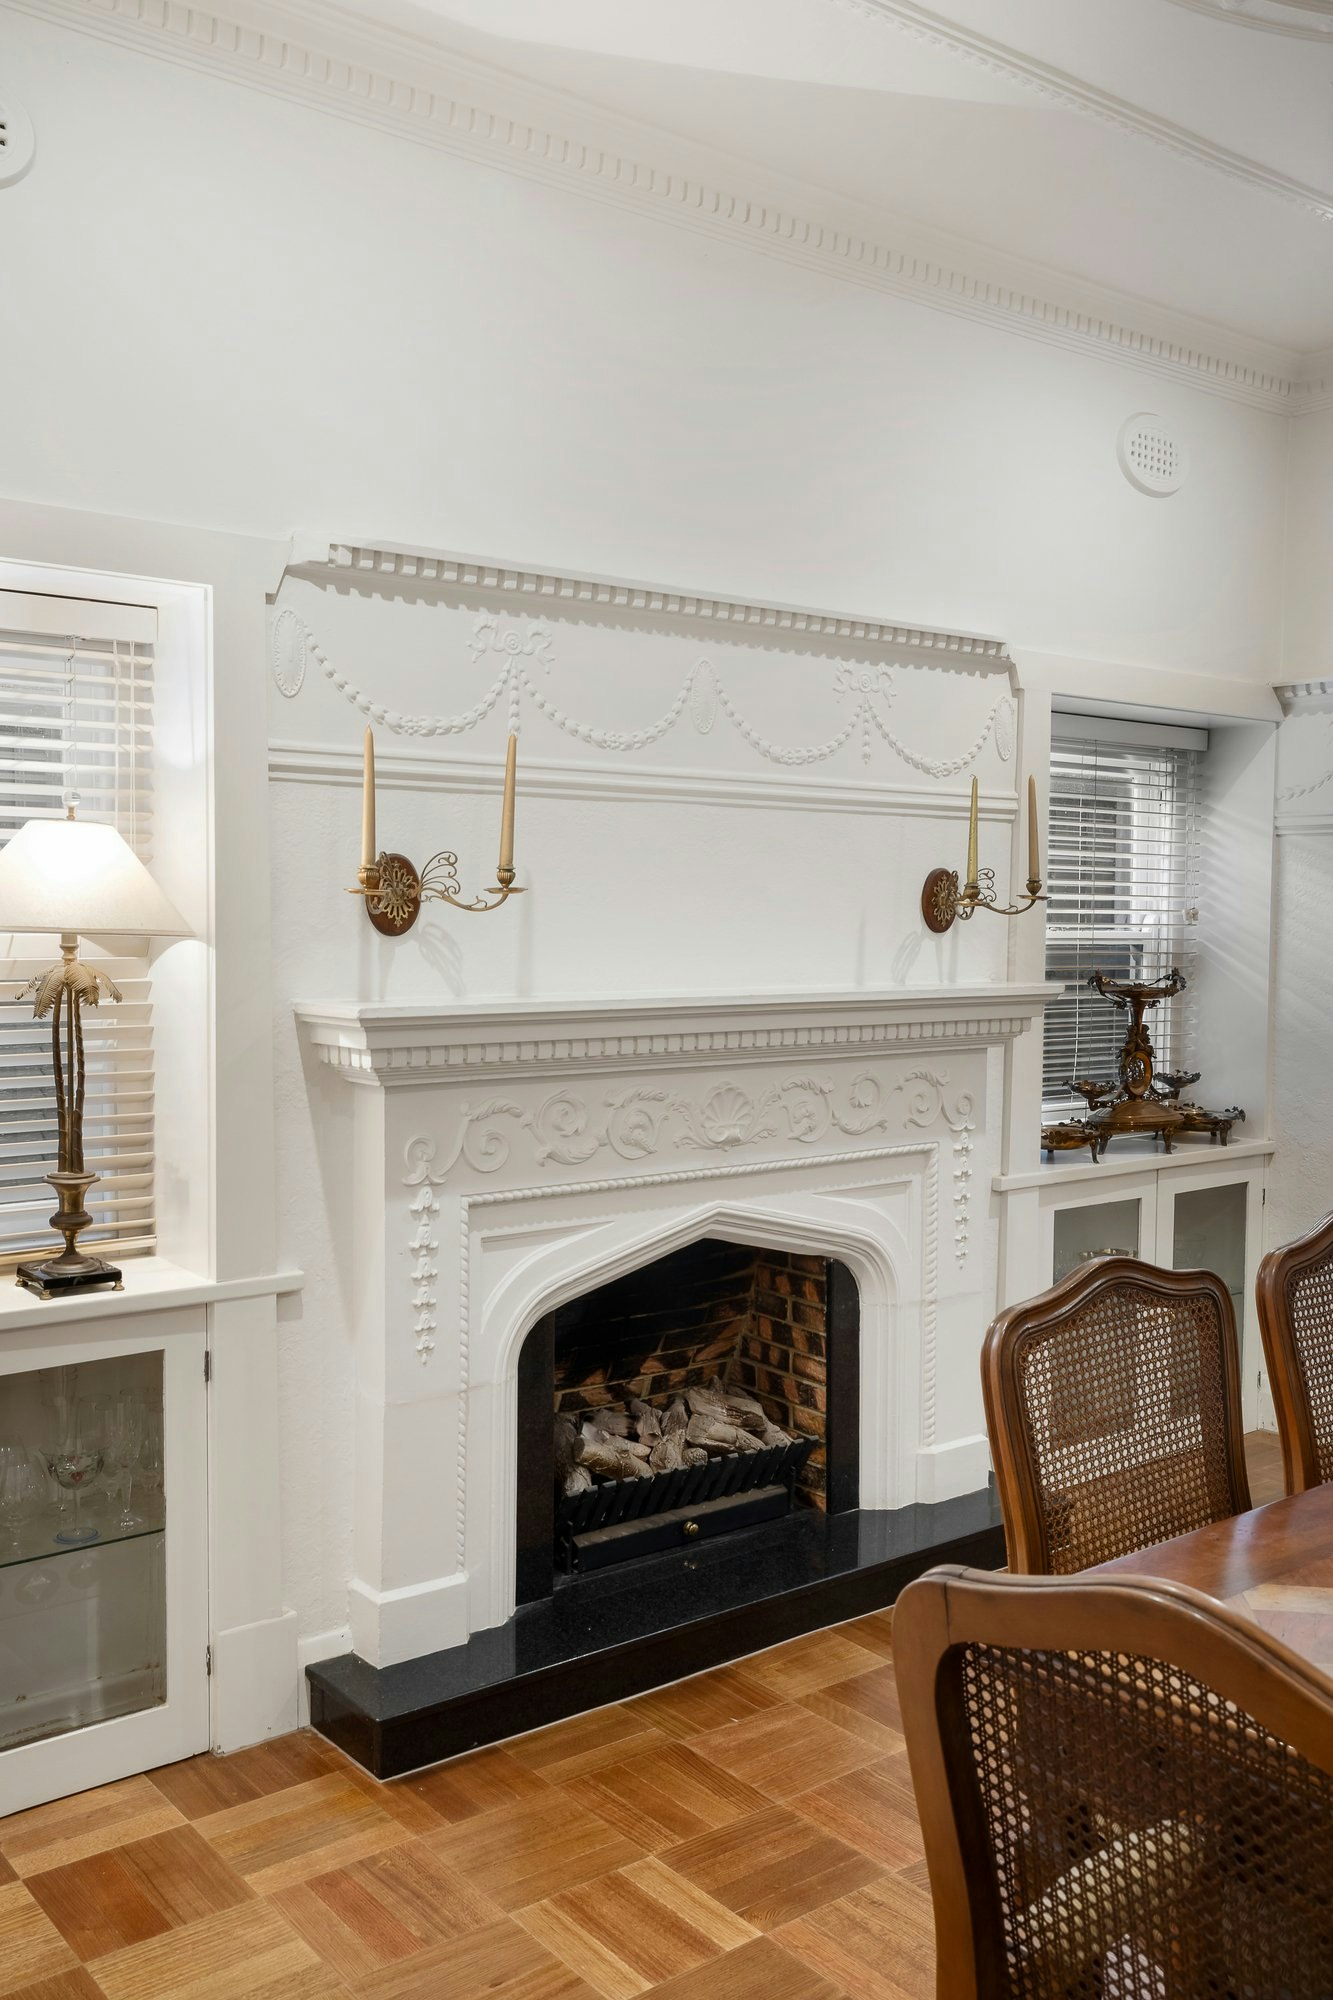 Image of fireplace